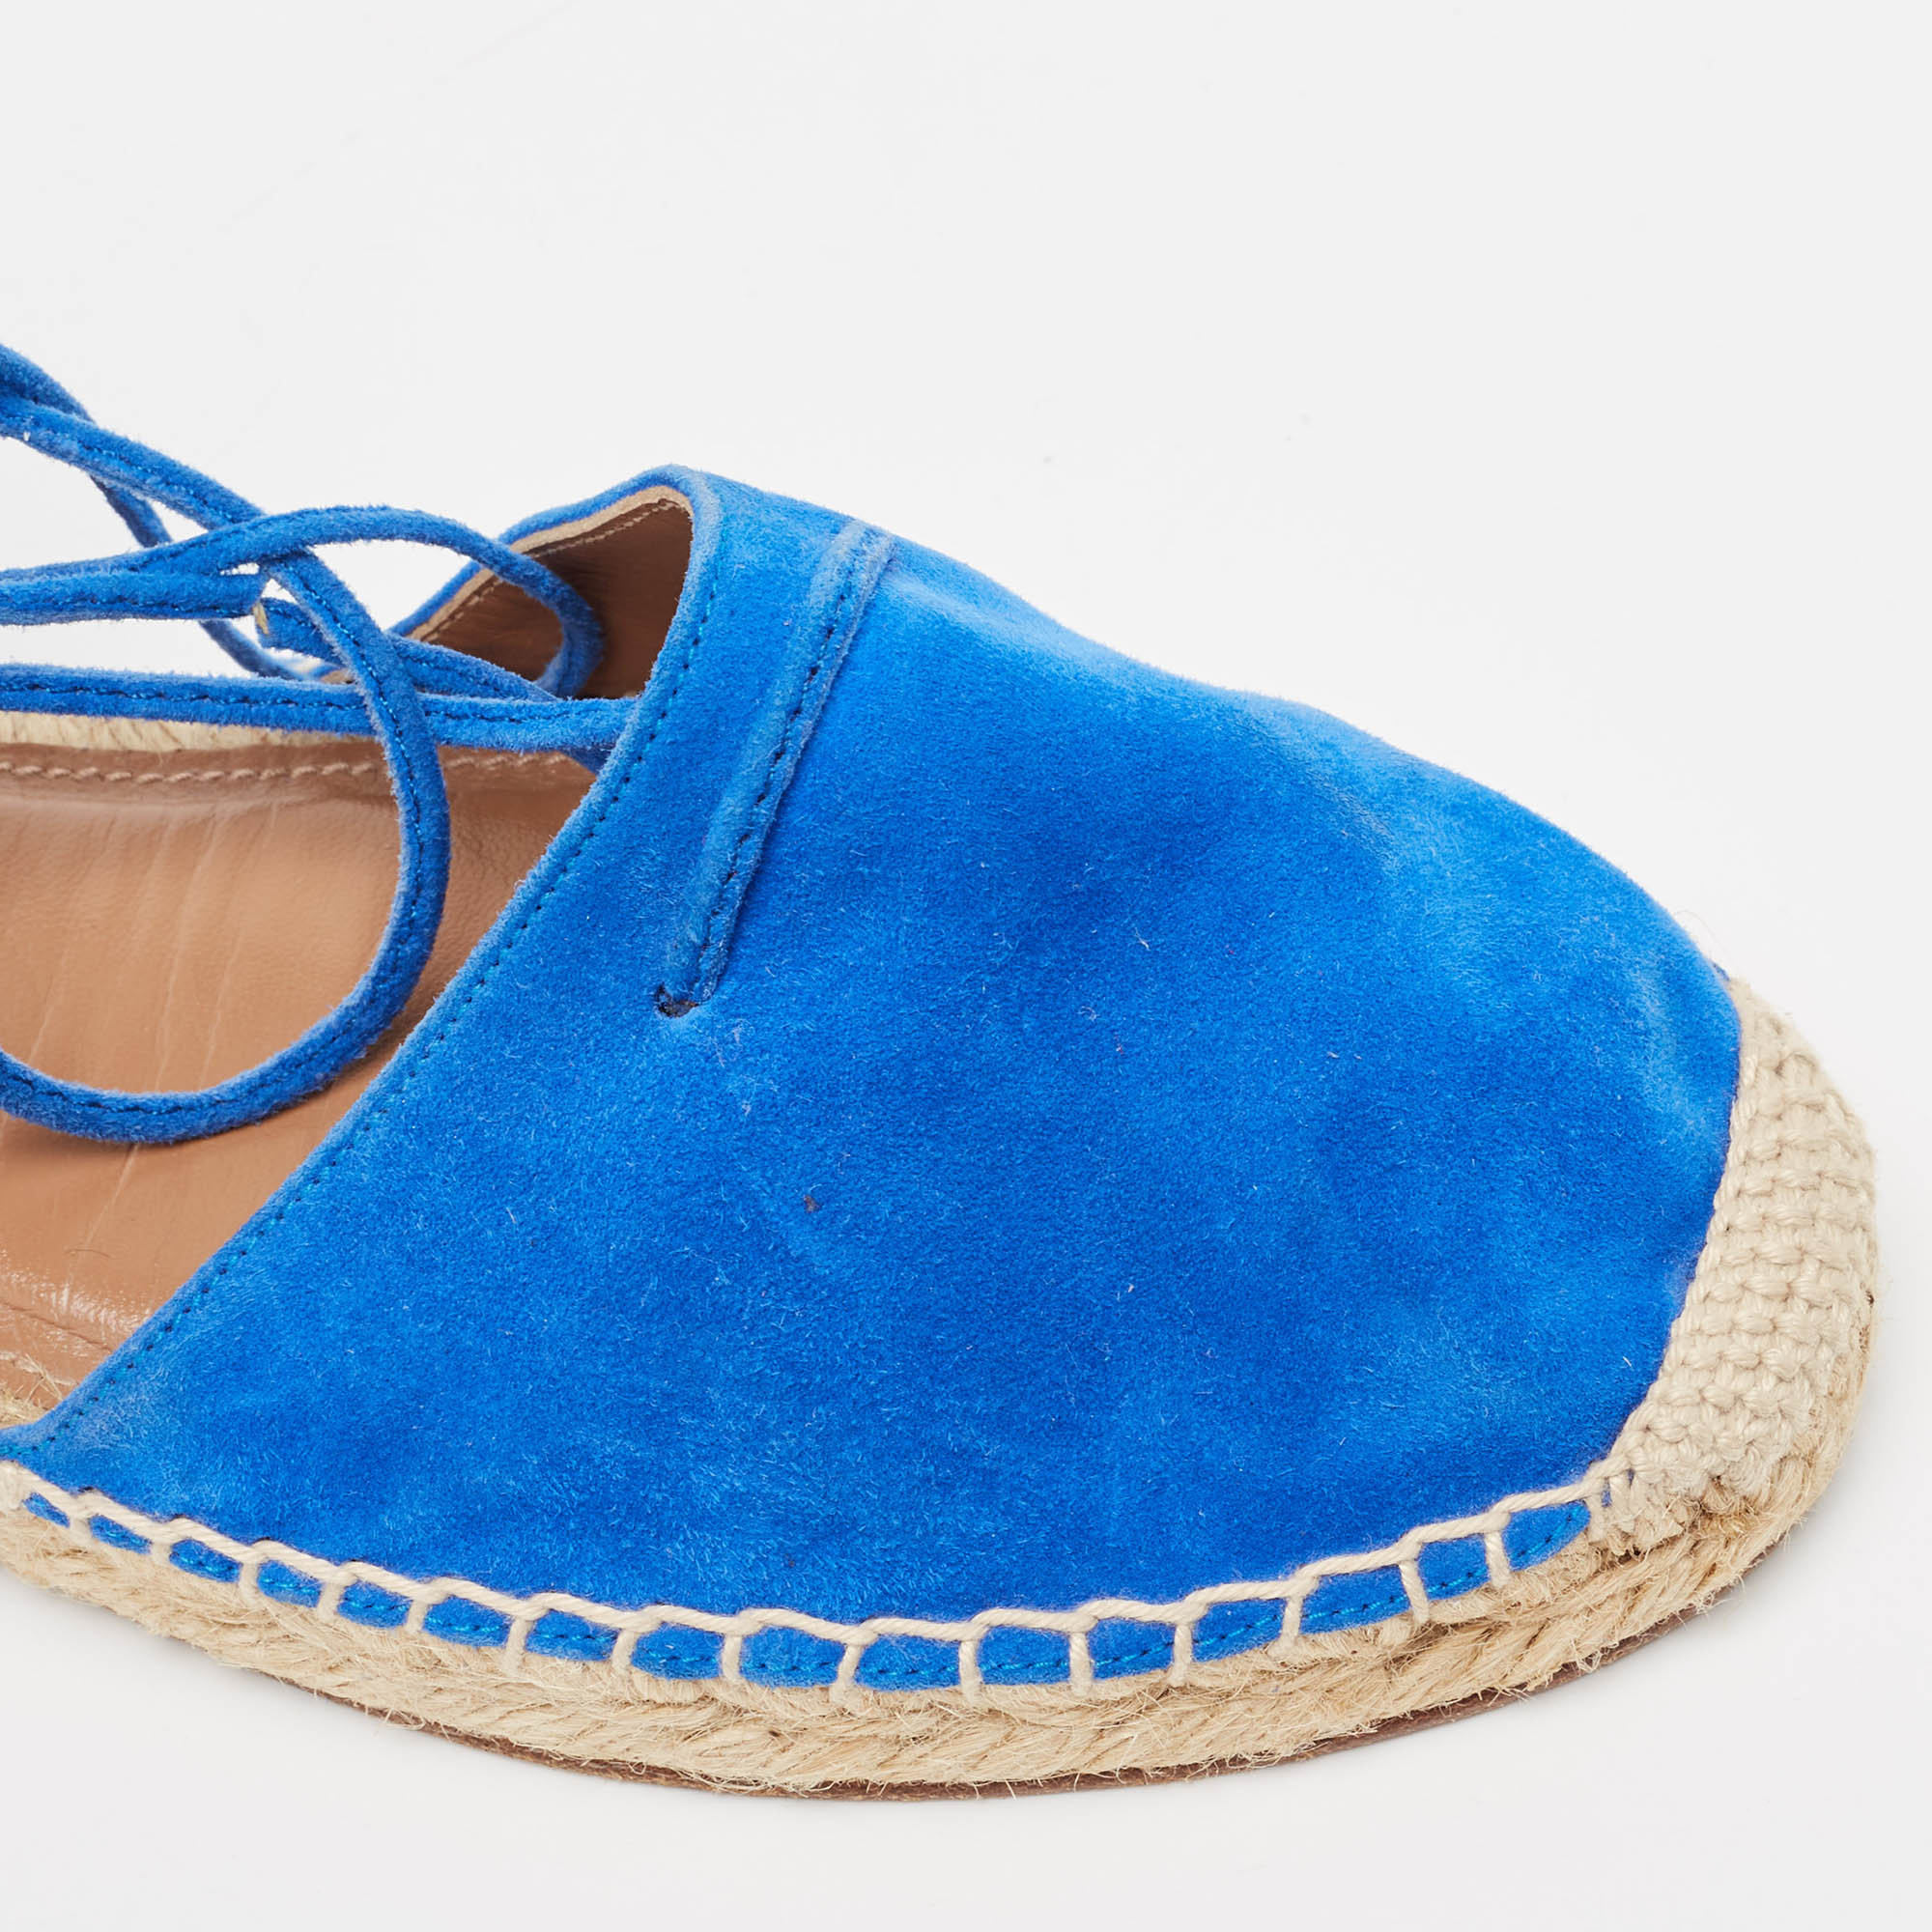 Aquazzura Blue Suede Strappy Espadrille Sandals Size 38